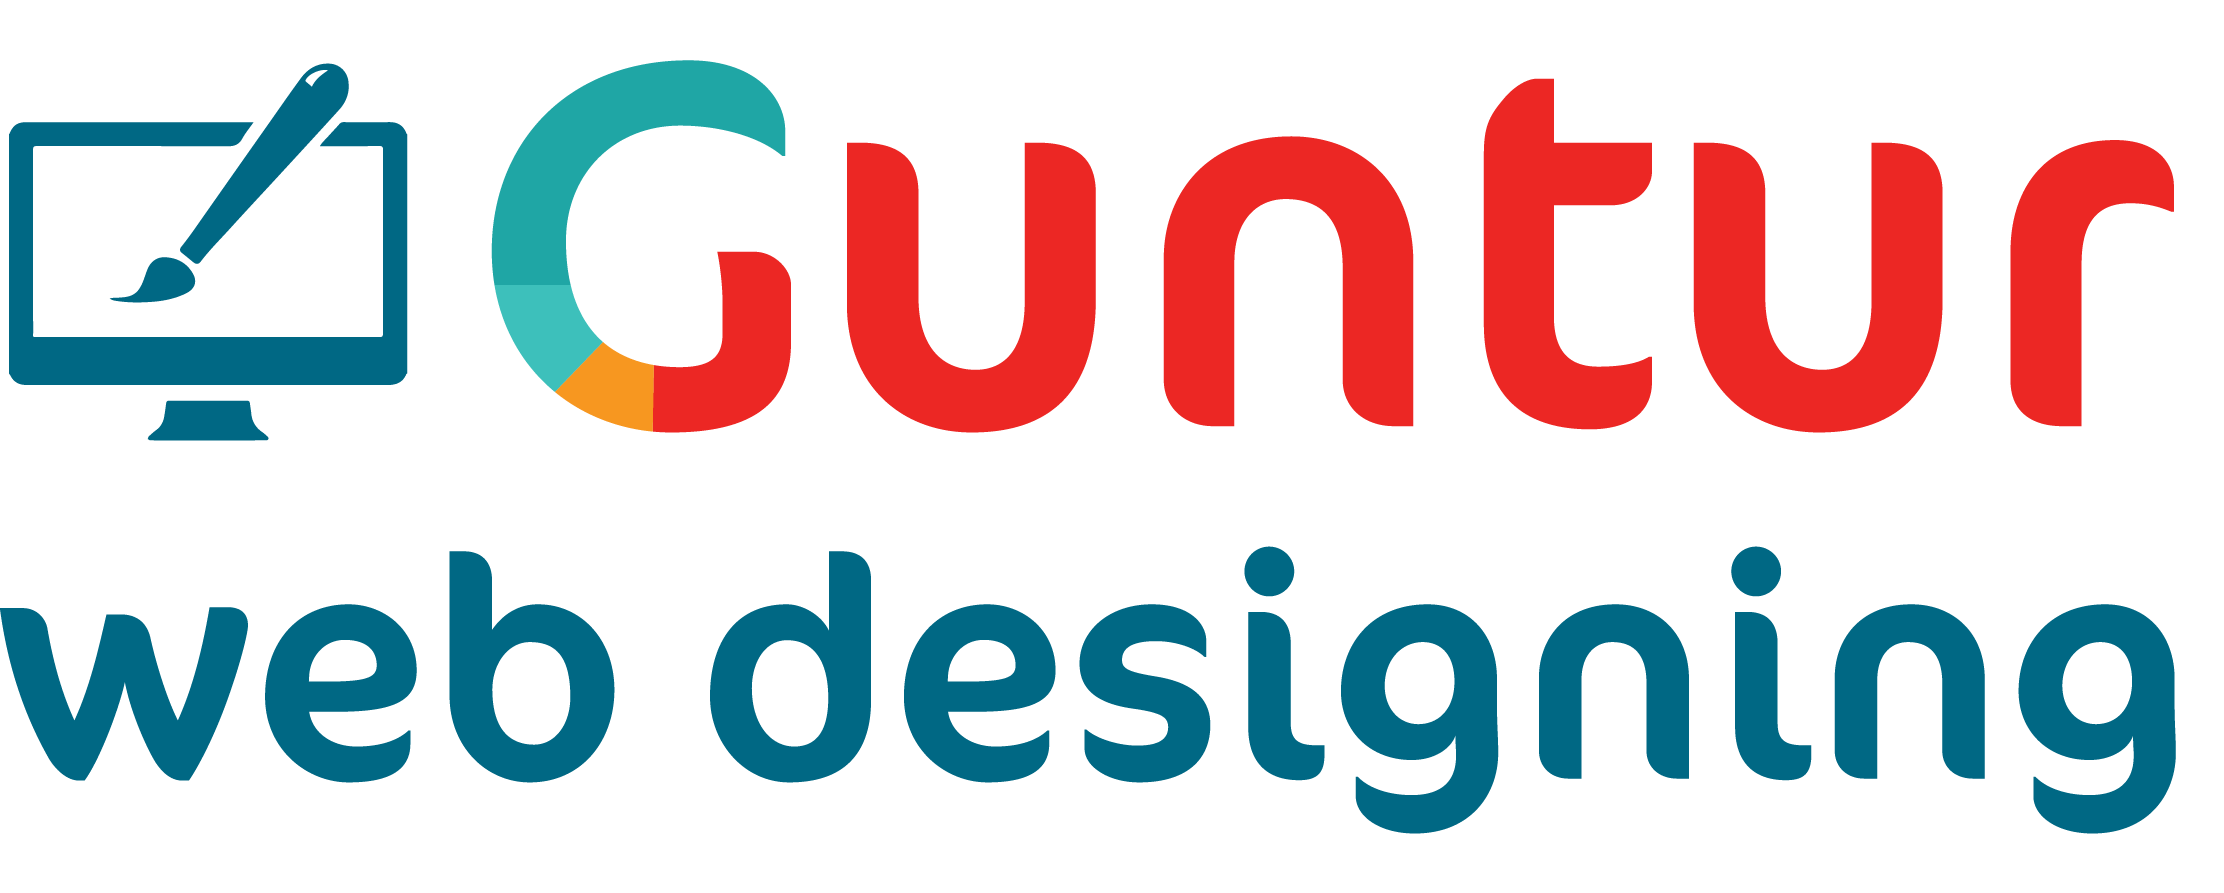 Best Web Designing Company in GunturServicesAdvertising - DesignAll Indiaother